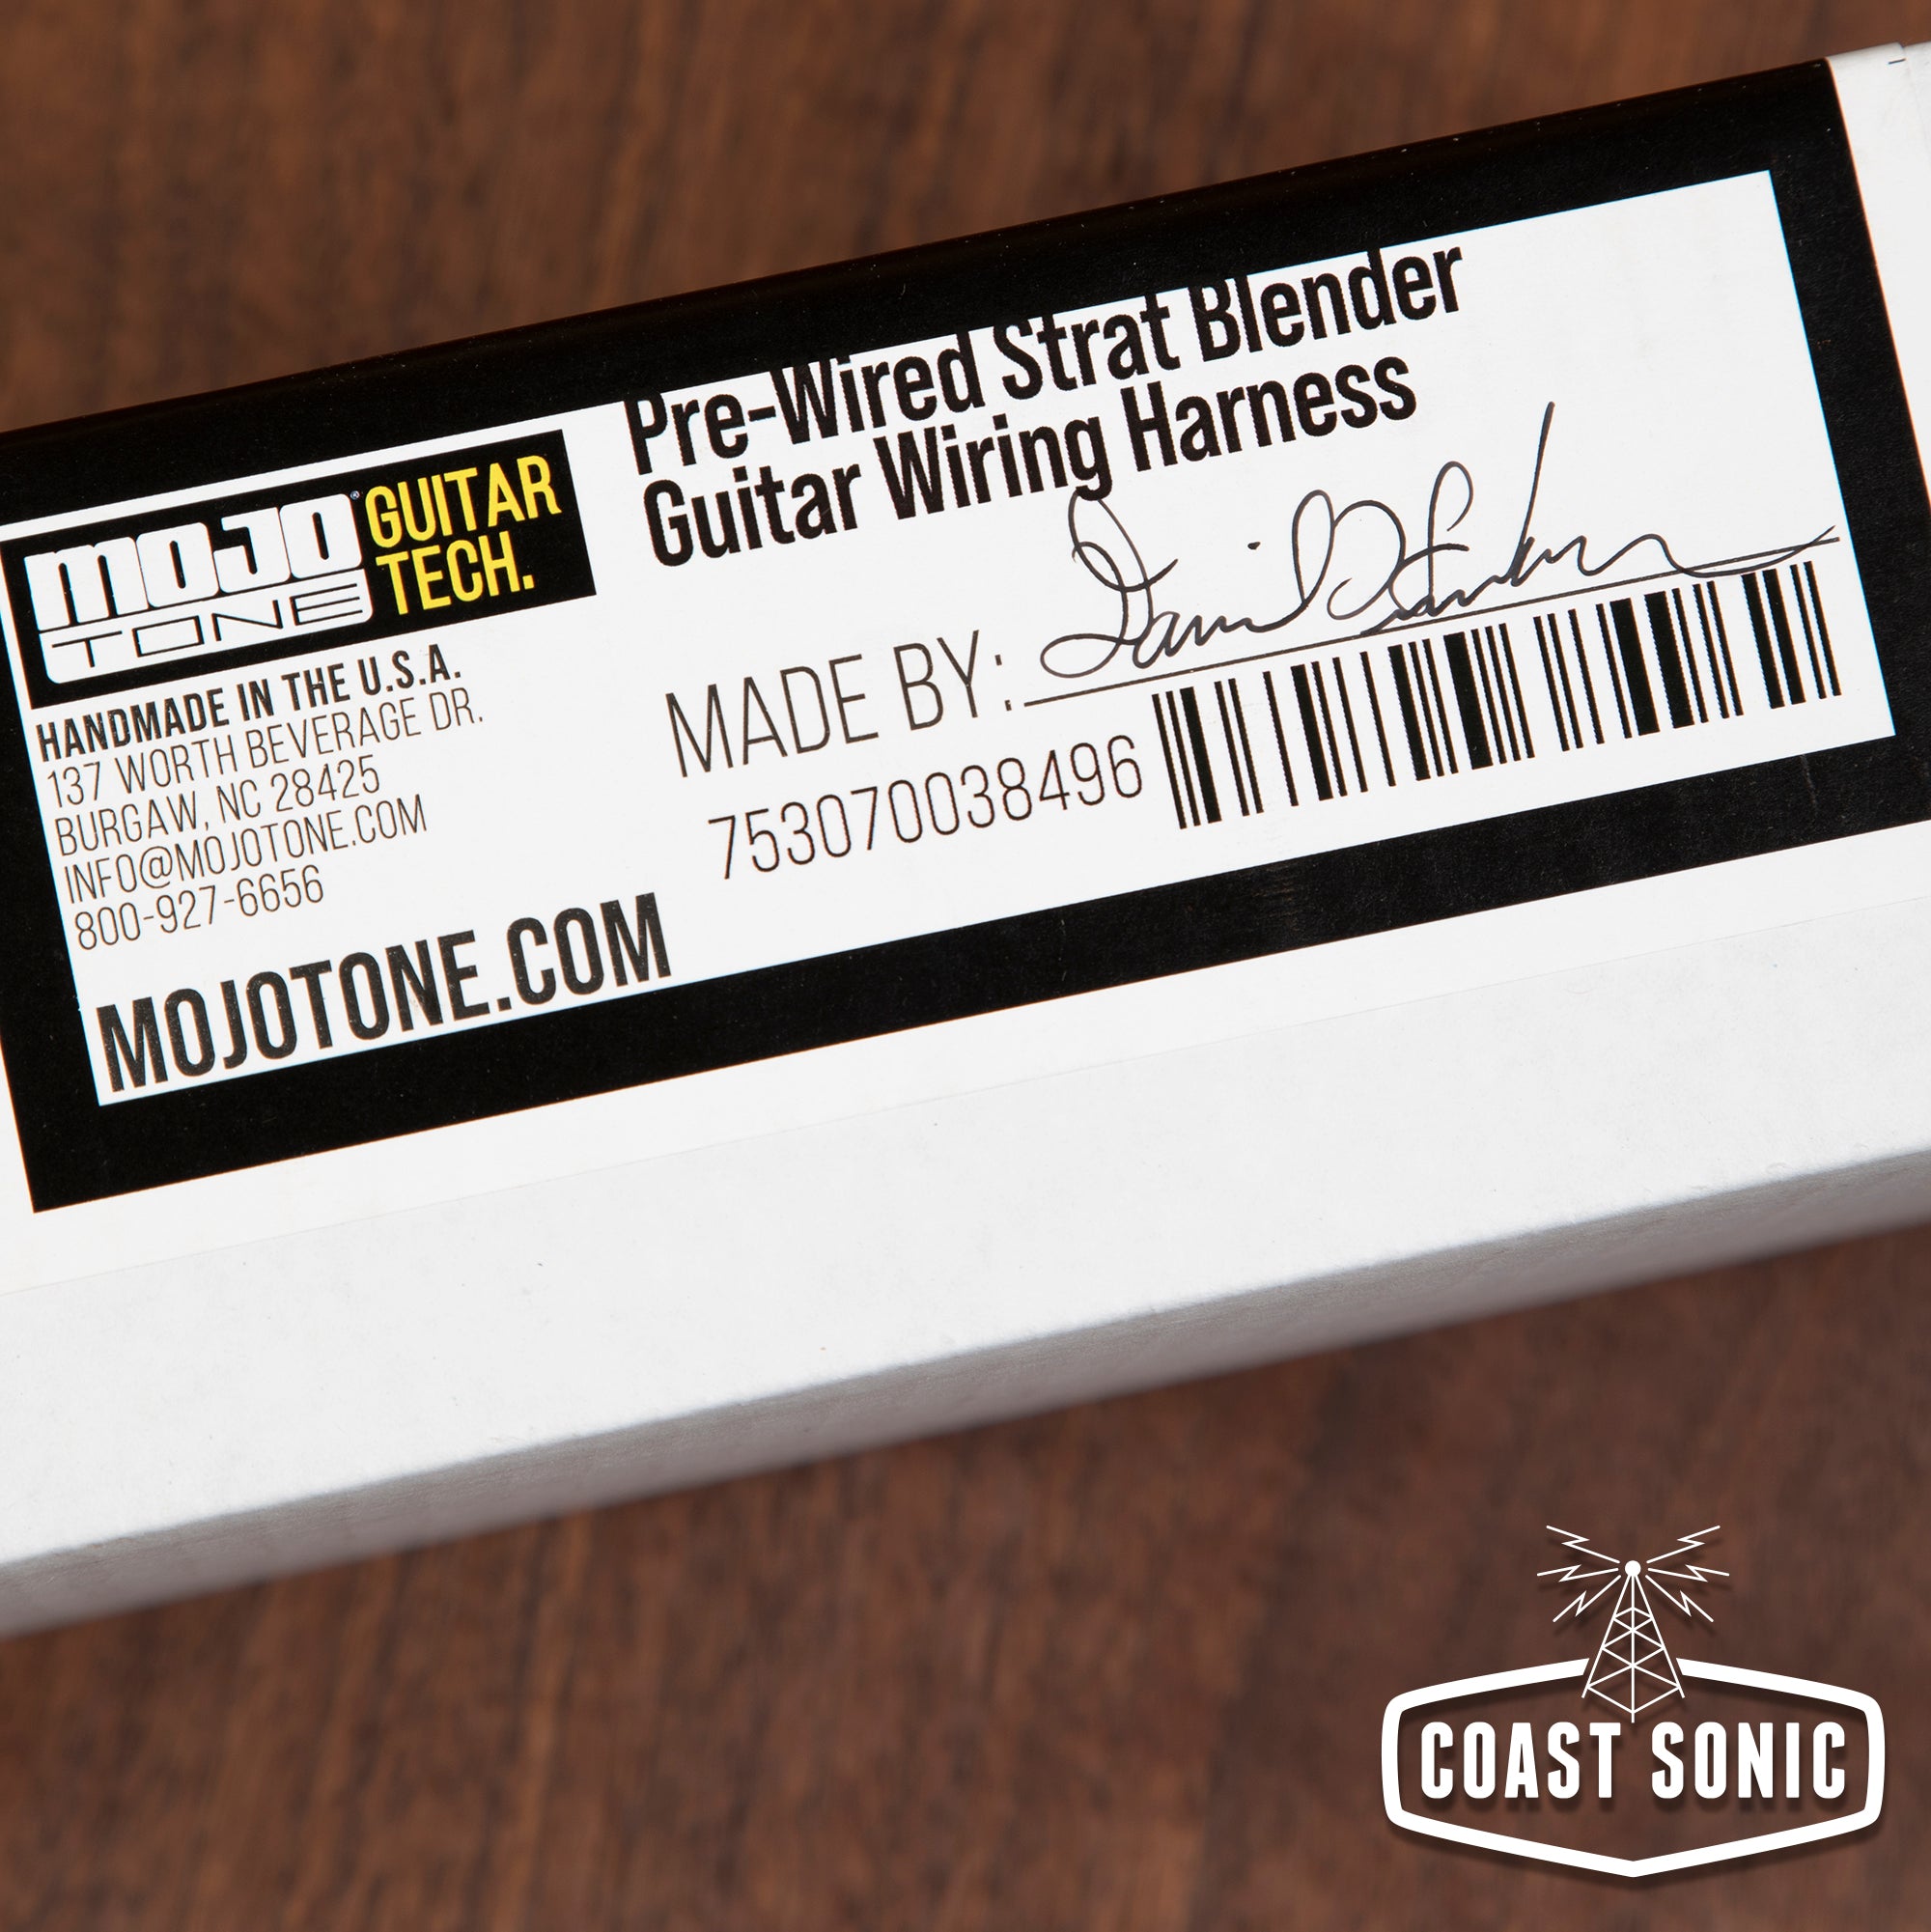 Mojotone Pre-Wired Strat Blender Guitar Wiring Harness